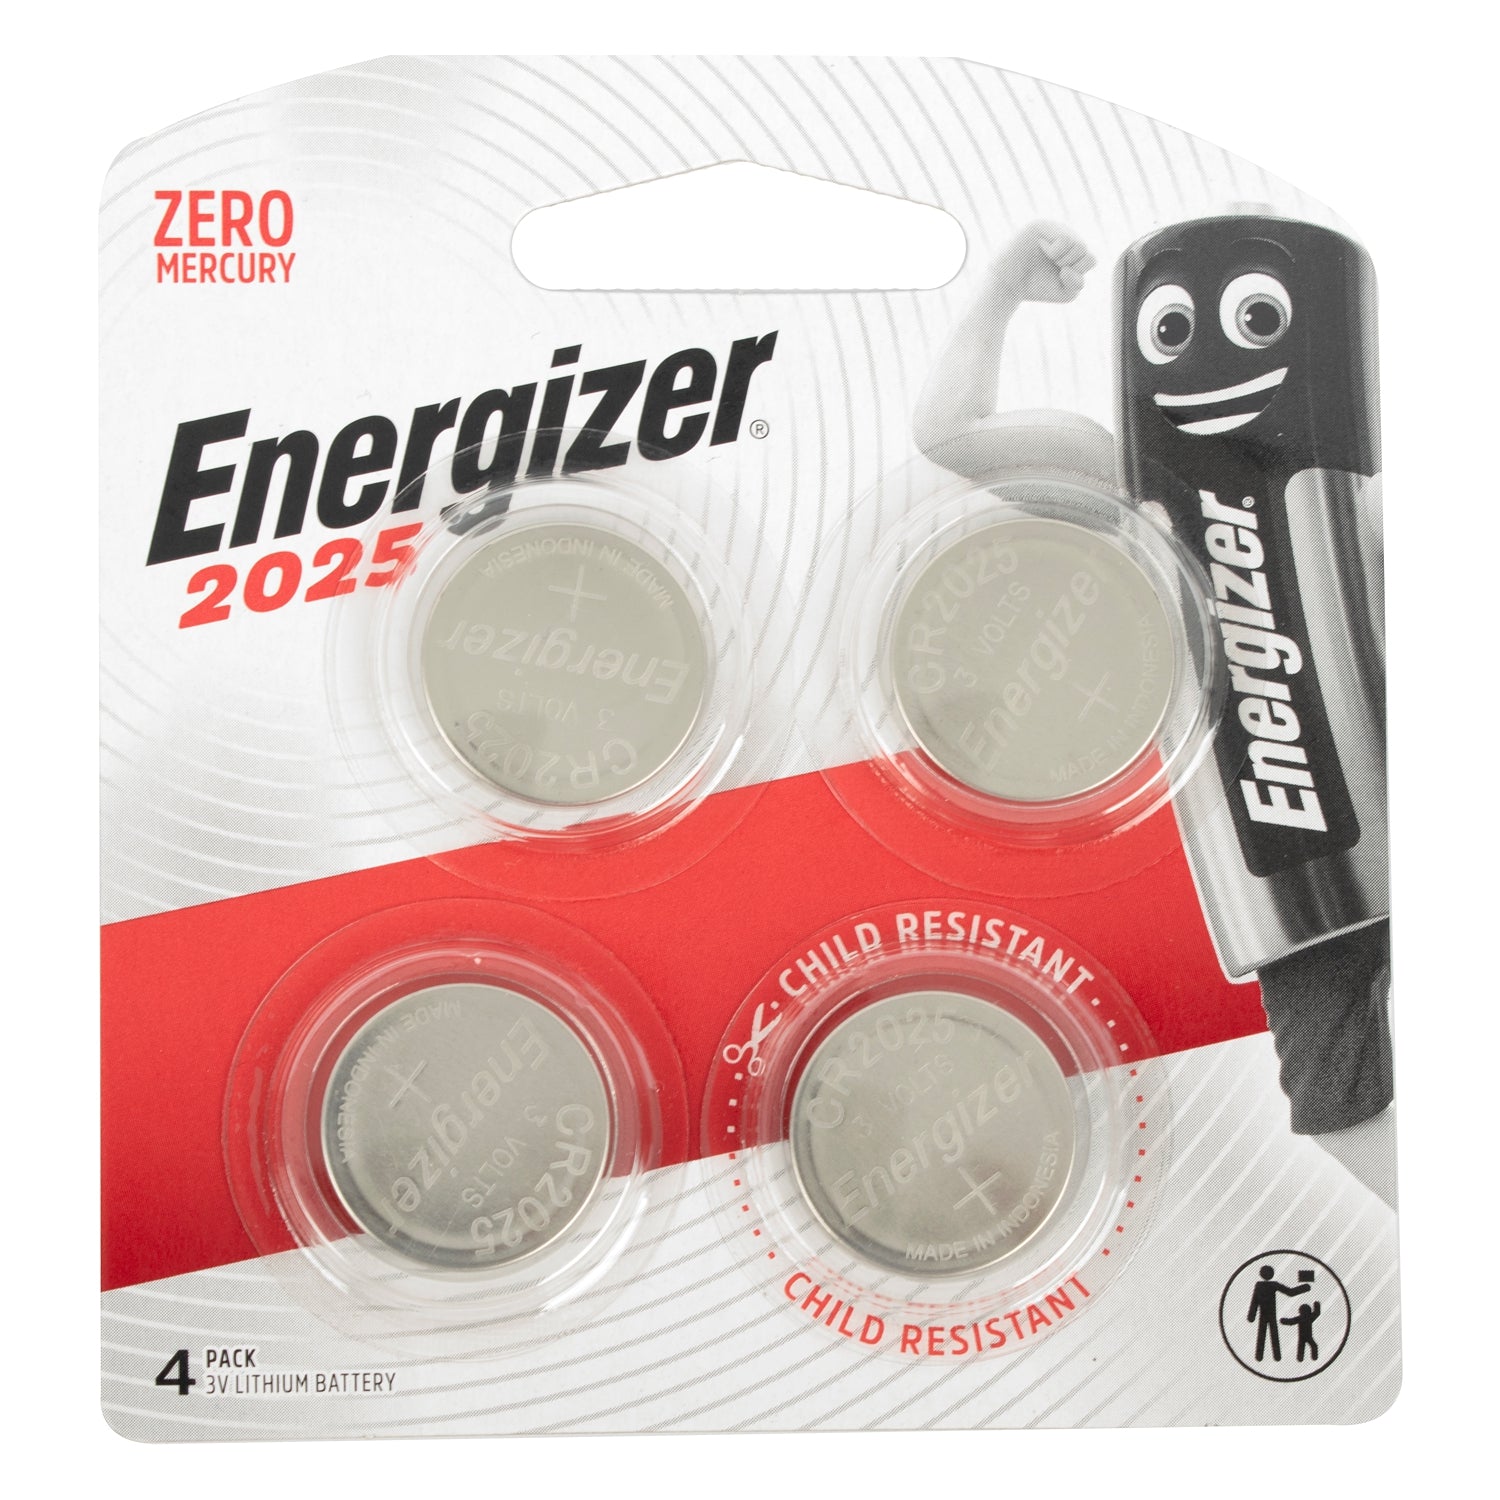 Energizer cr2025 3v lithium coin battery 4 pack (moq12)